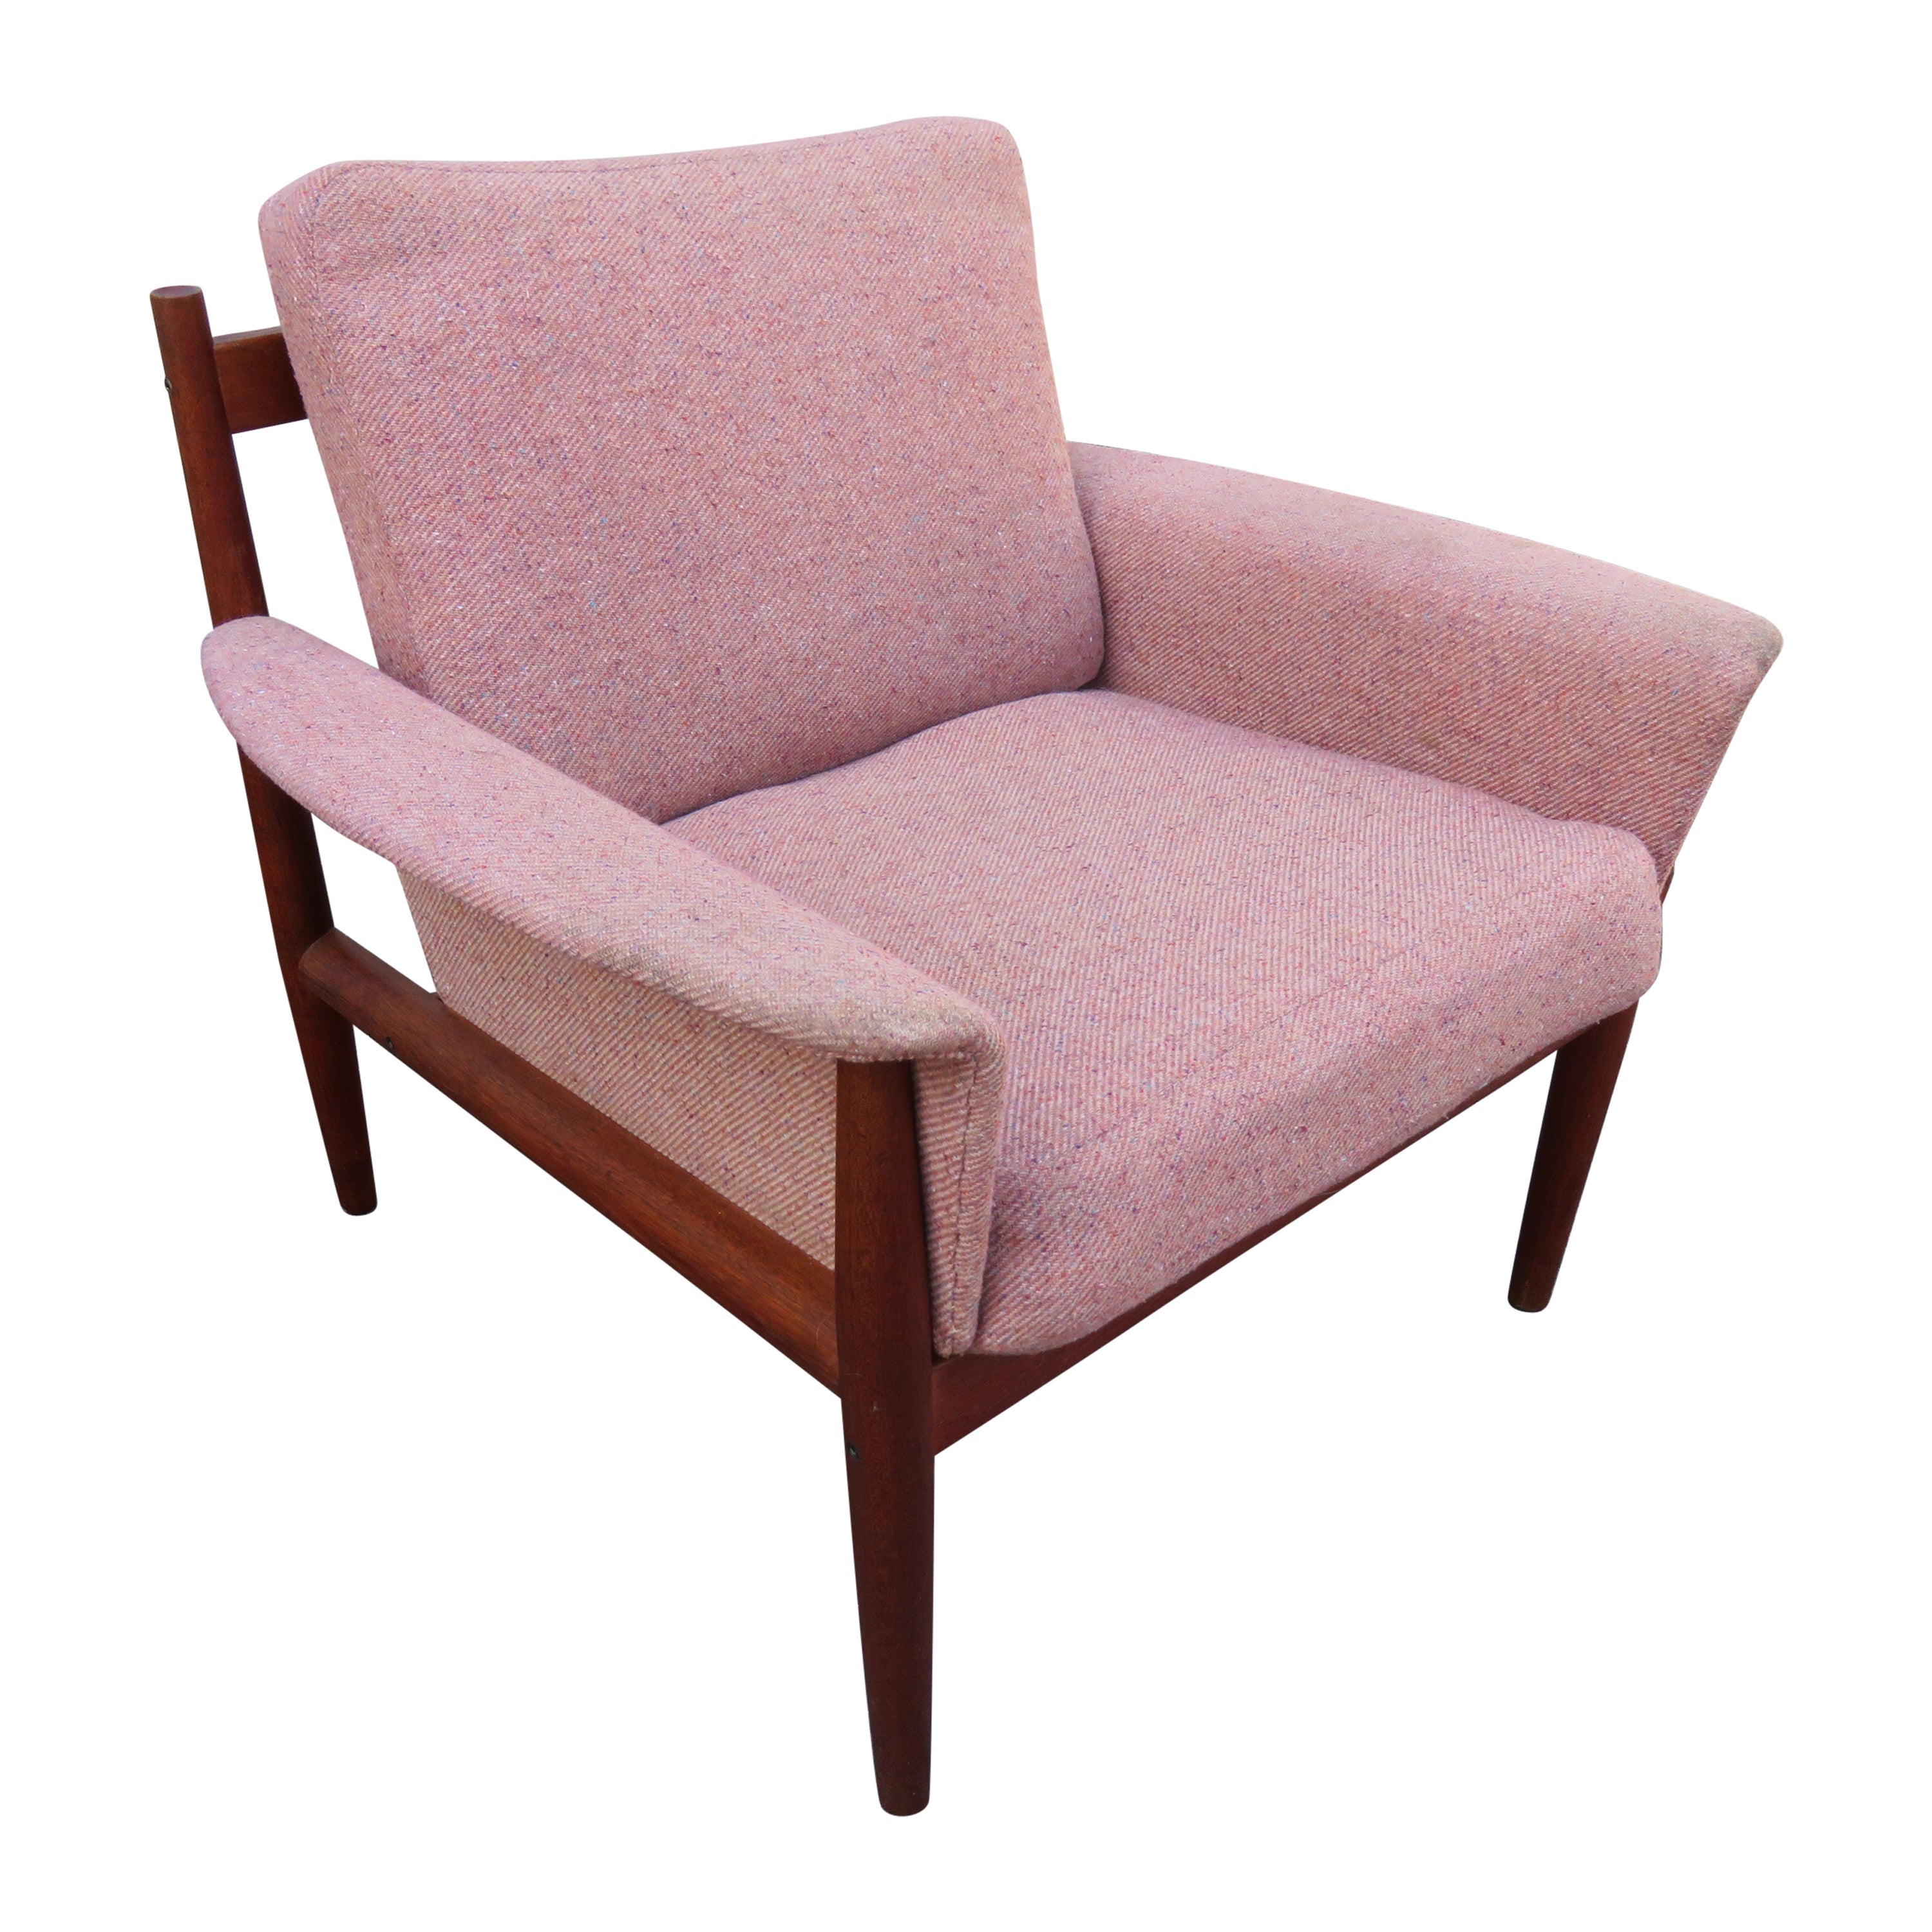 Outstanding Grete Jalk Teak Lounge Chair, Midcentury Danish Modern